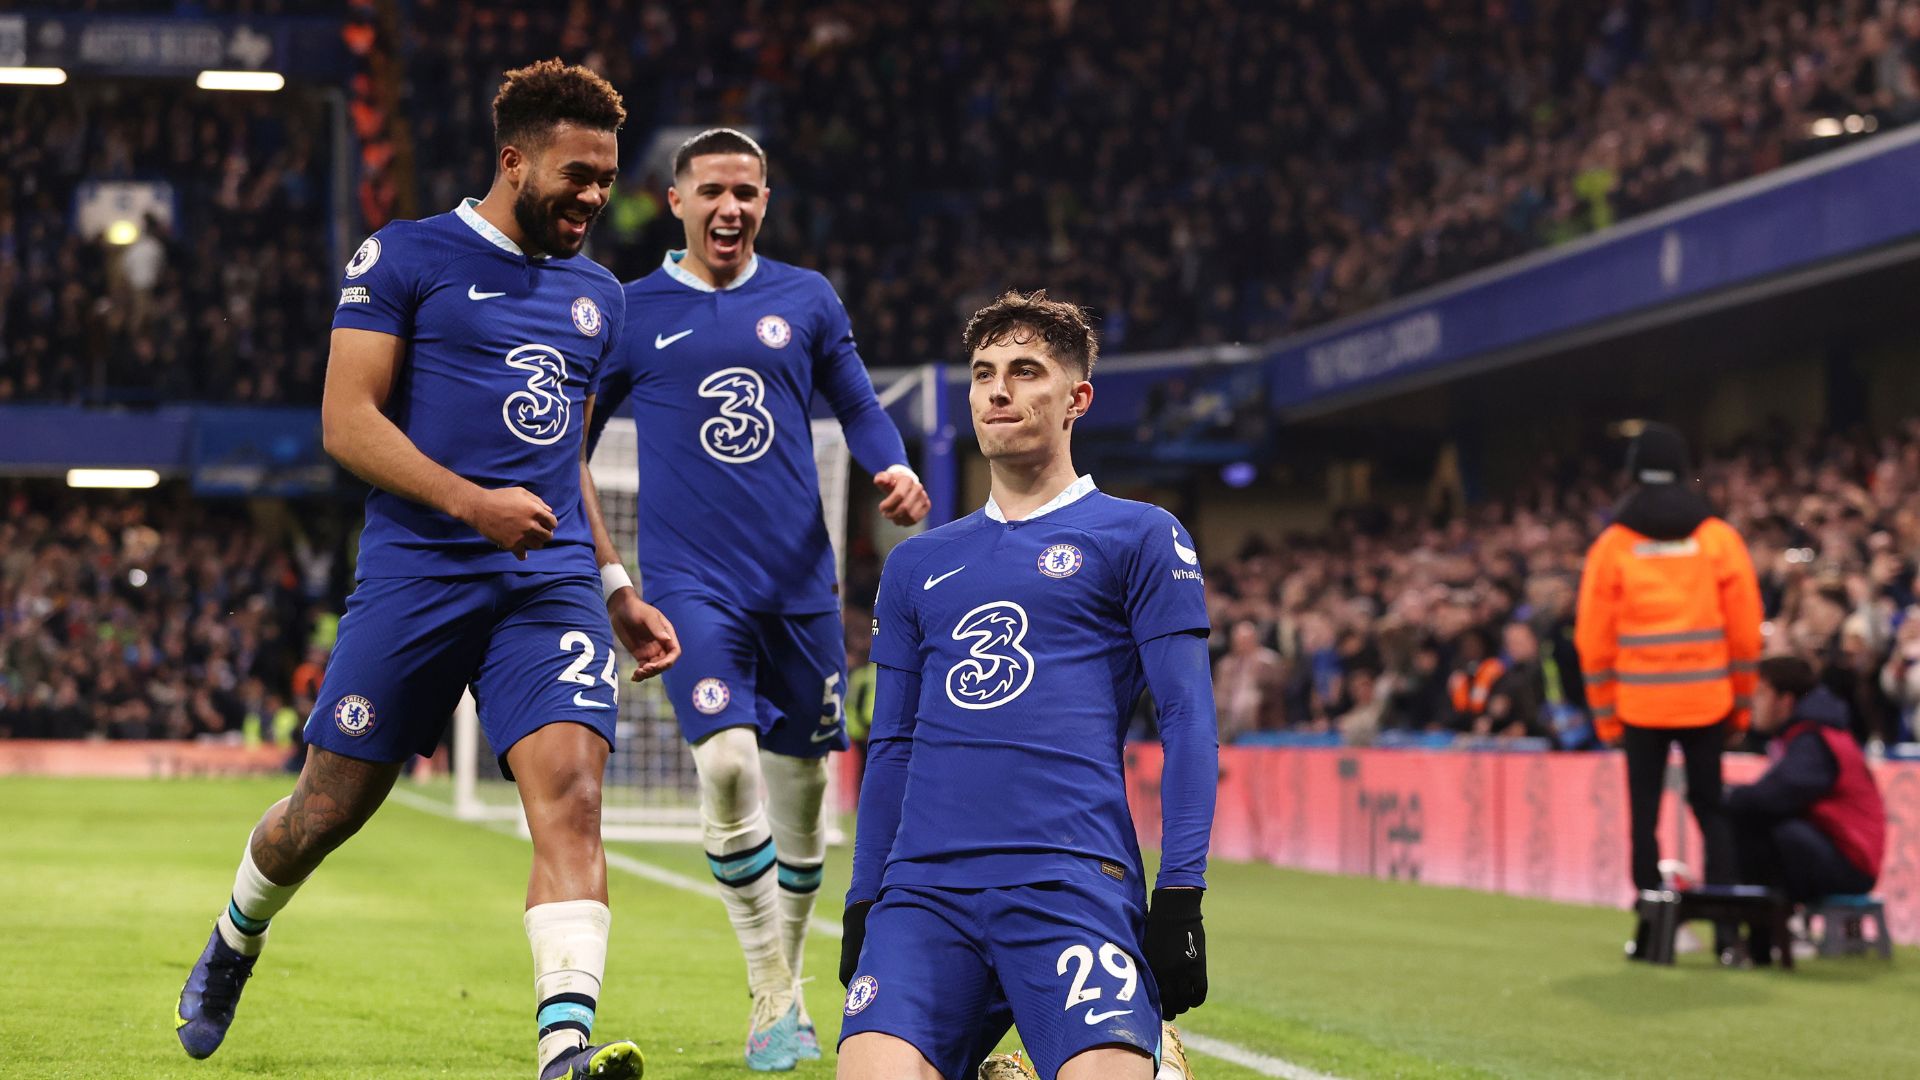 Jogadores do Chelsea comemorando gol contra o Everton (Crédito: Getty Images)